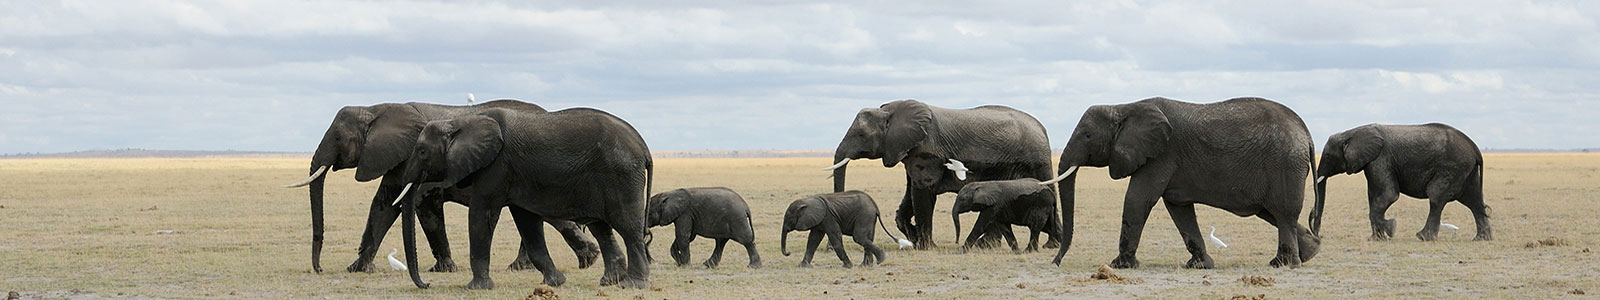 №1433 - Слоны в саване